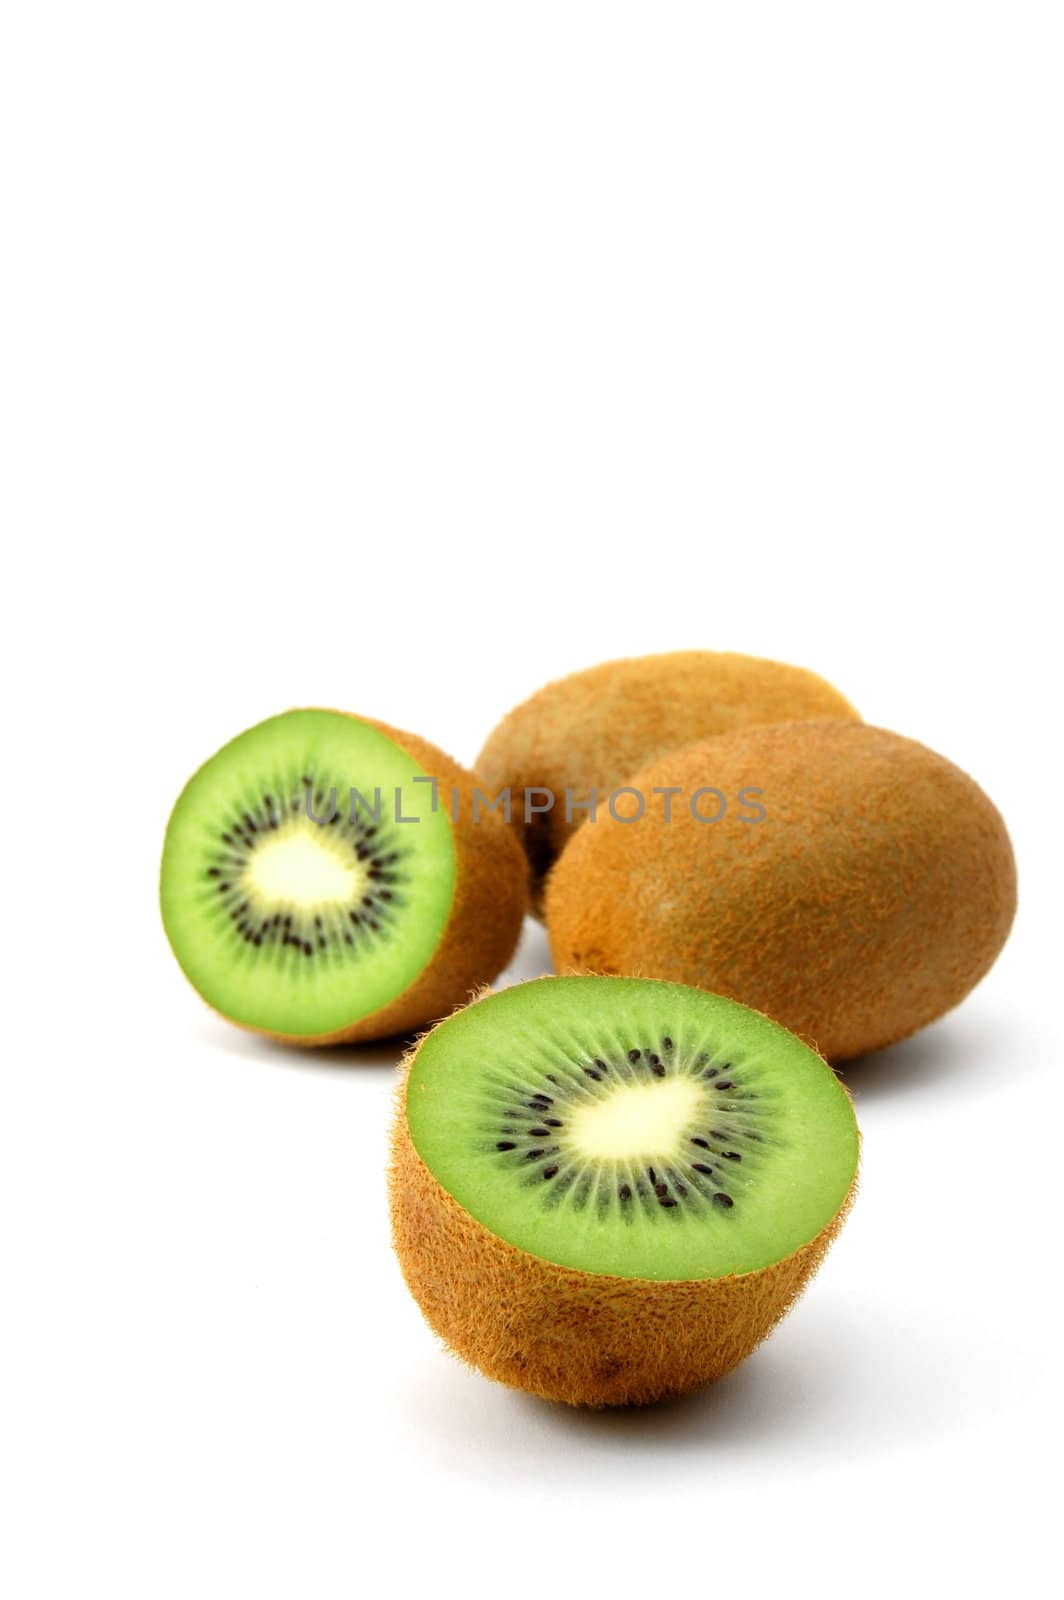 kiwi fruit isolated on white background by gunnar3000